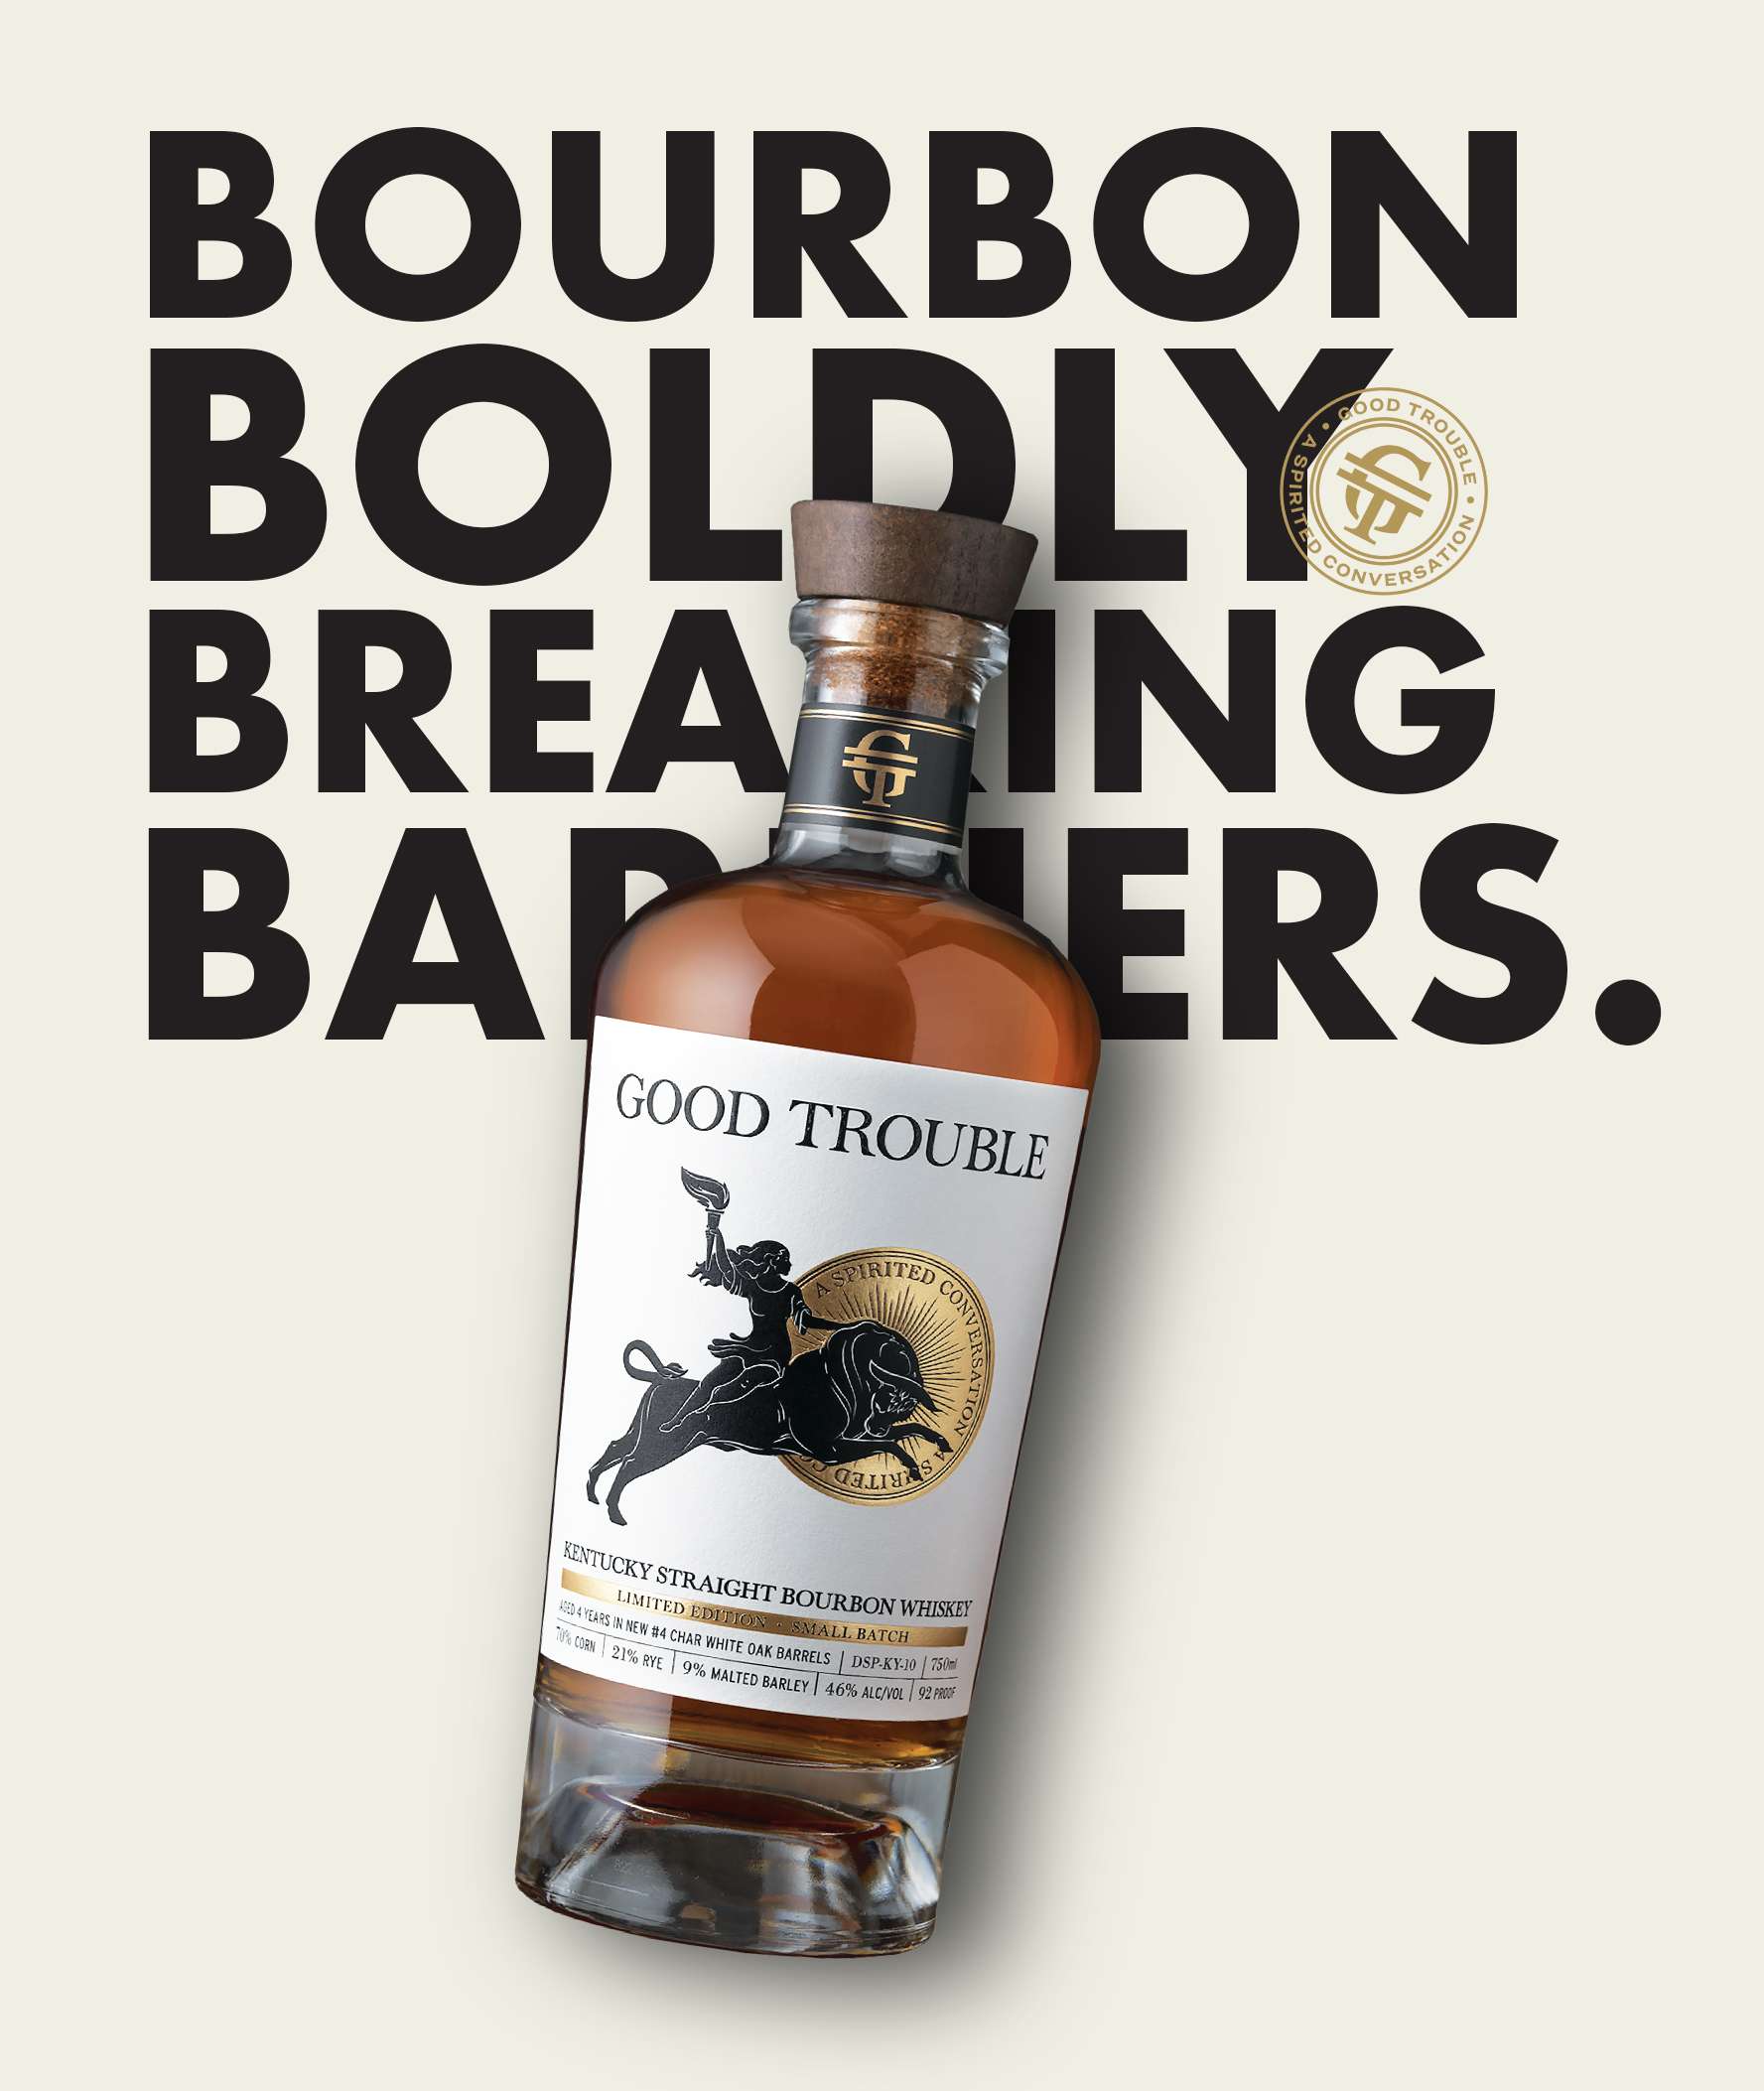 Bourbon Boldly Breaking Barriers (portrait verseion)